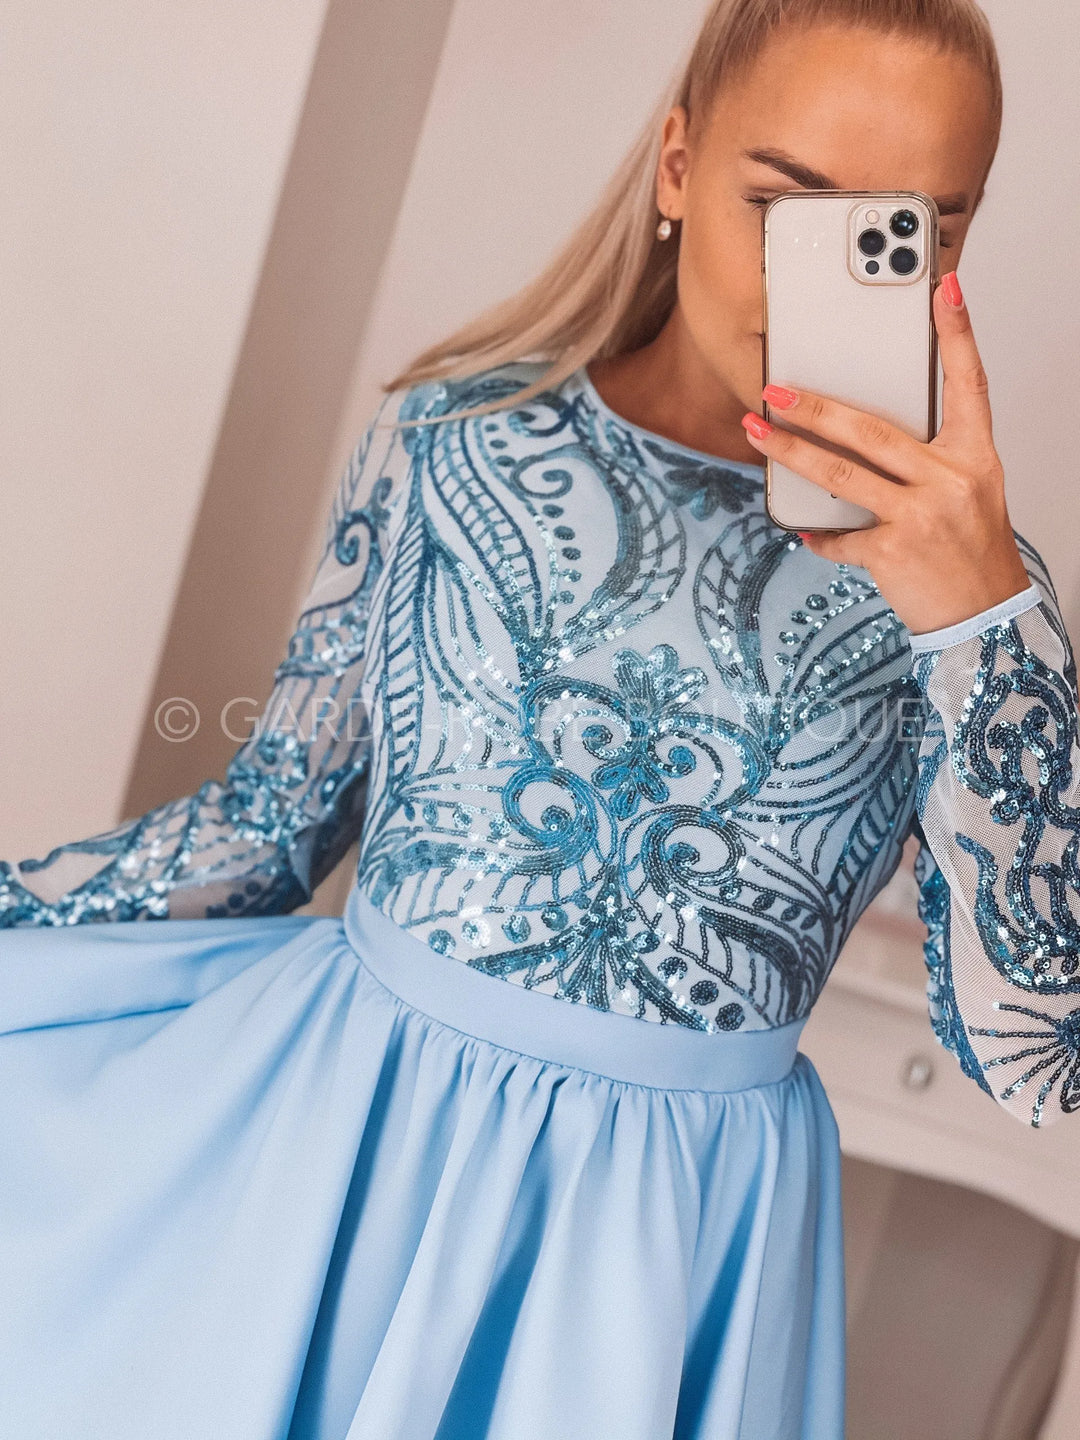 Mini dress "Blue sequin"